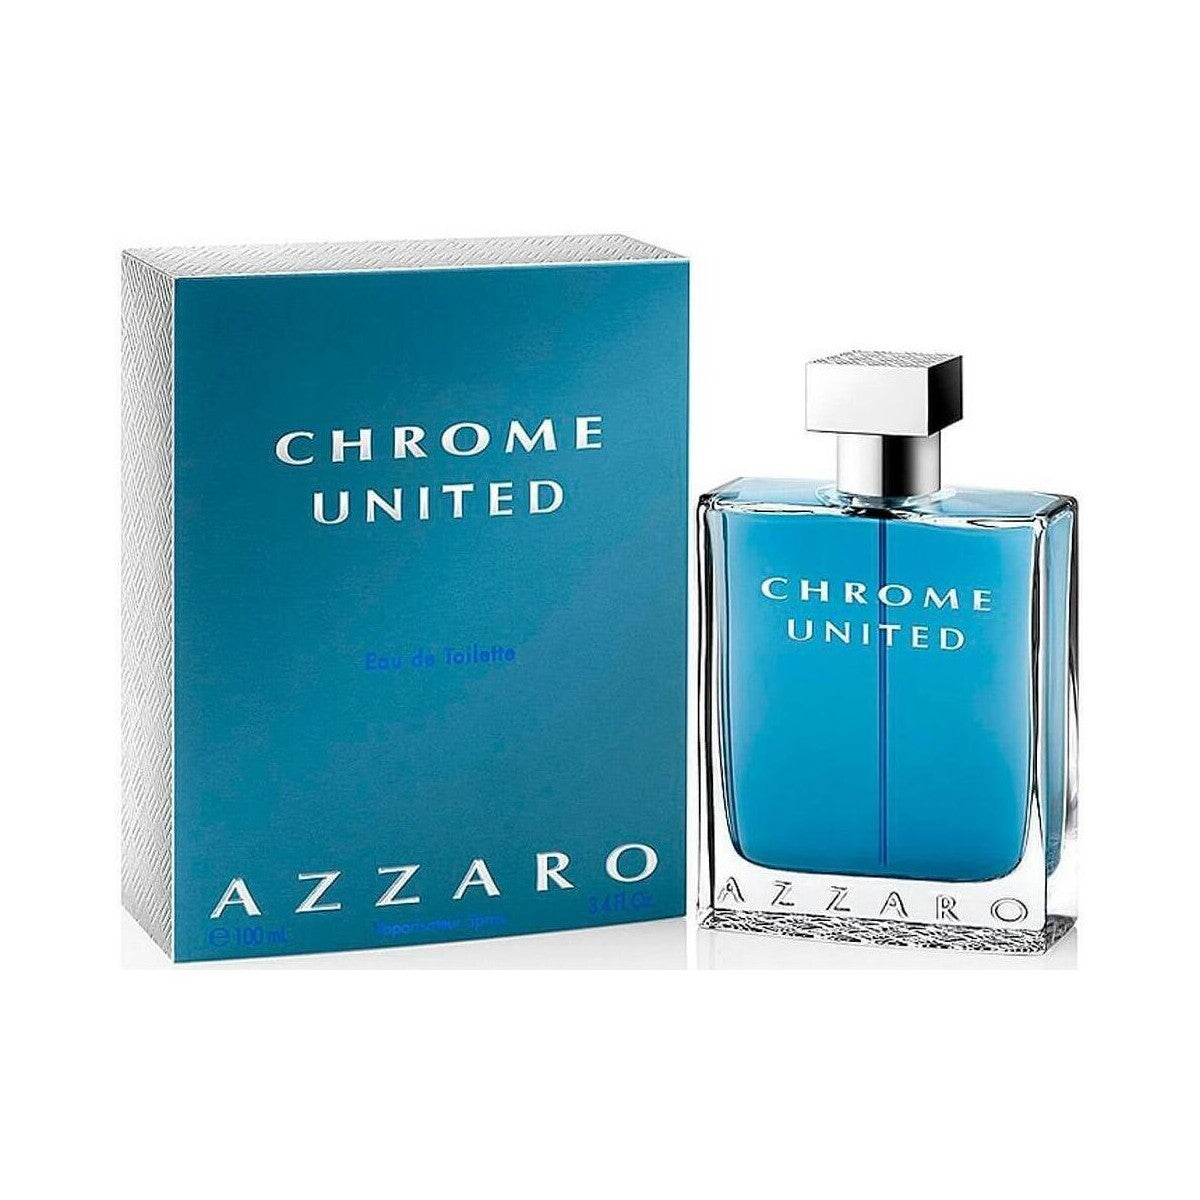 AZZARO - Chrome United